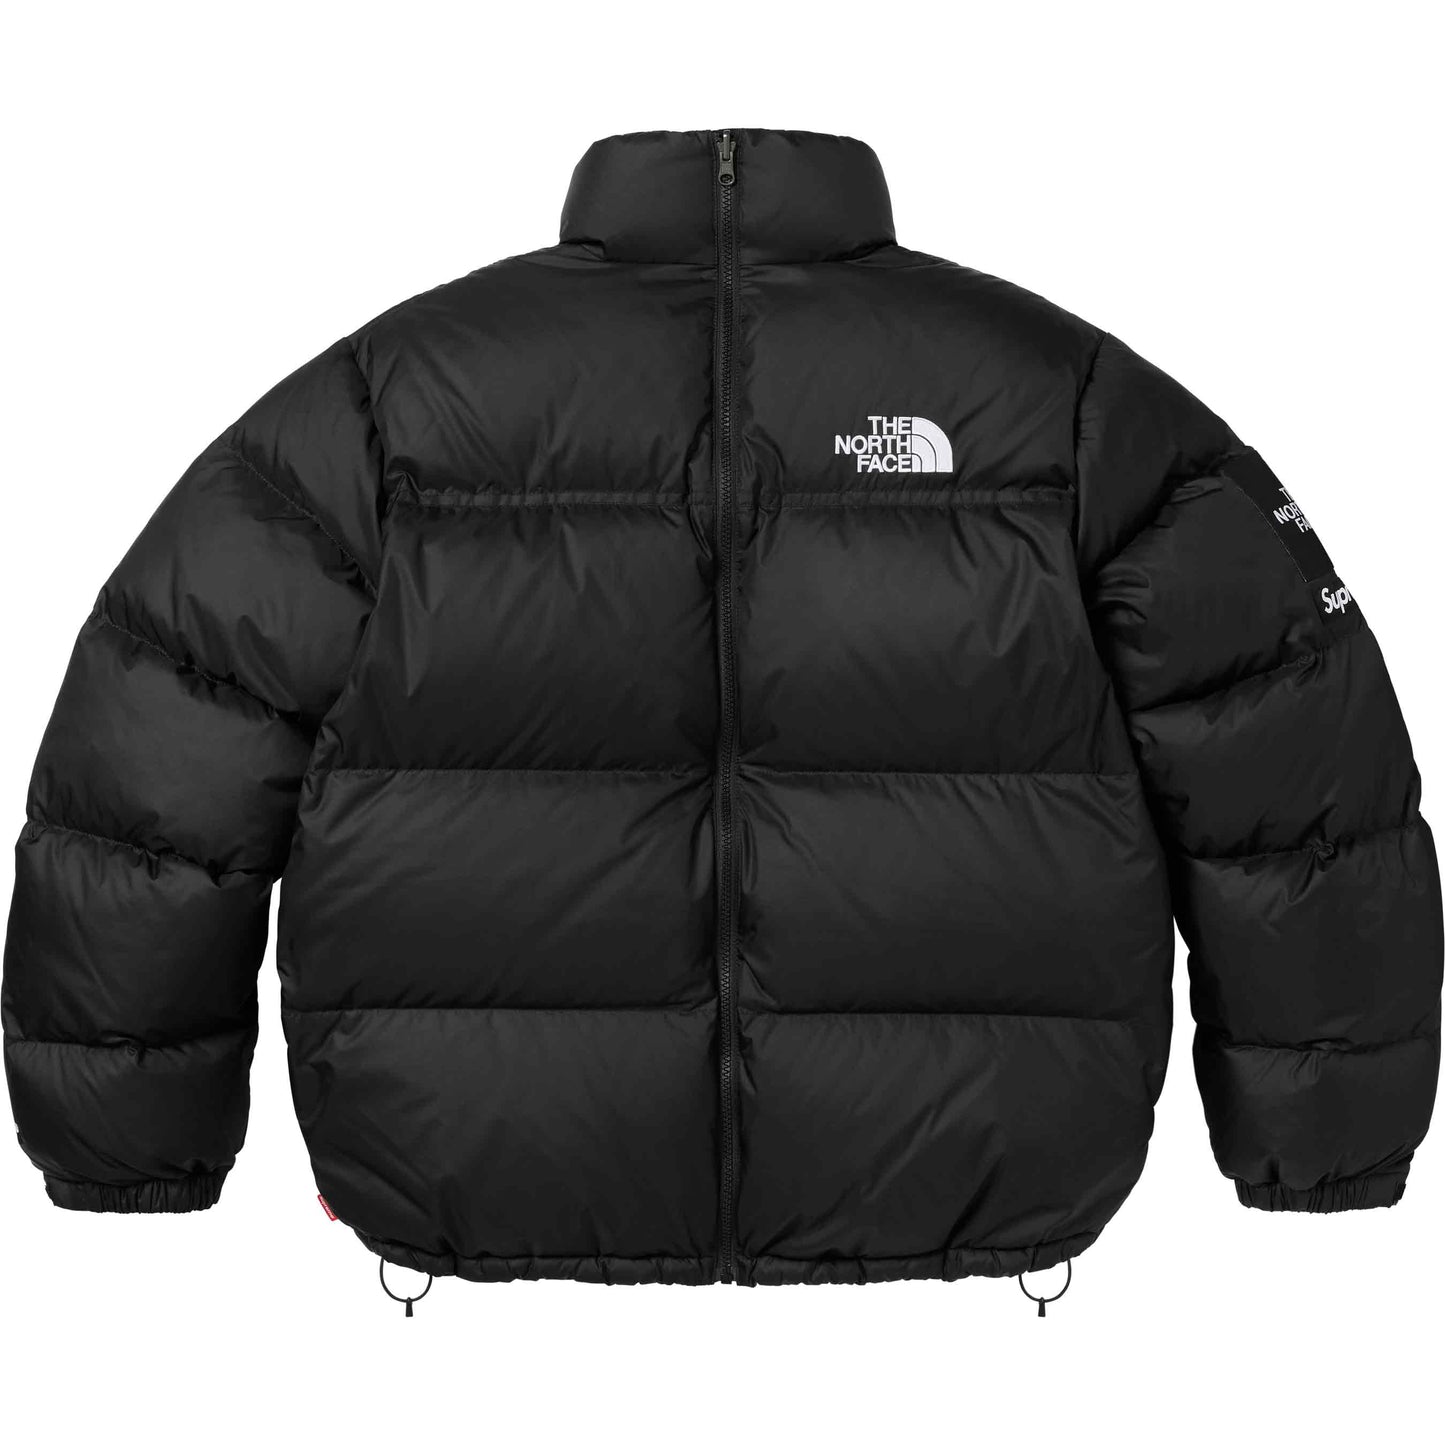 Supreme x The North Face Split Nuptse Jacket "Black"